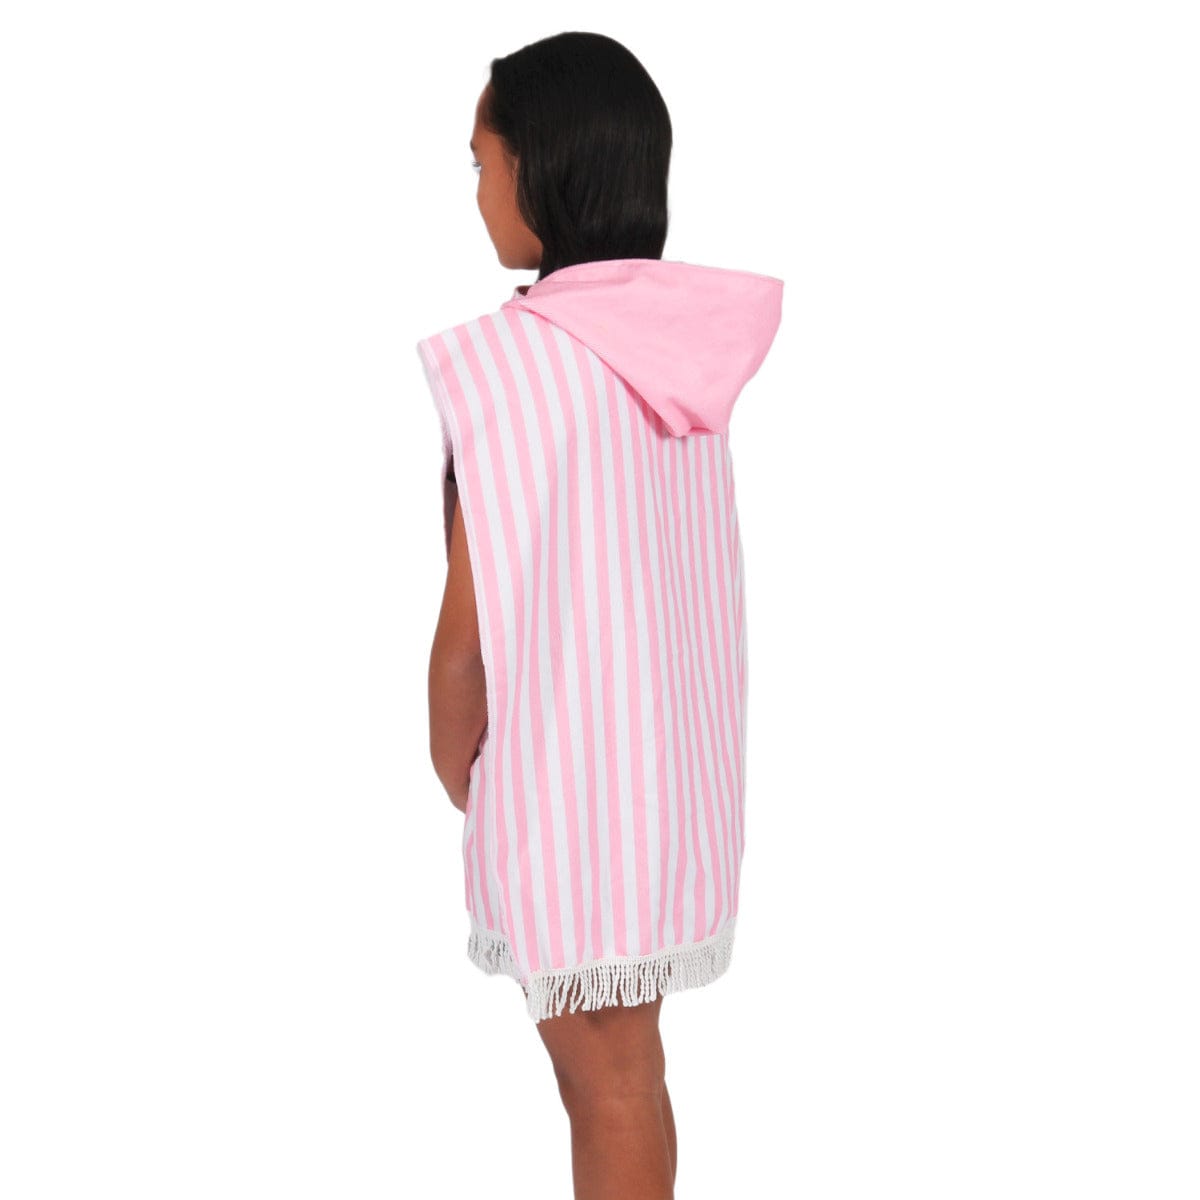 Splosh Children Accessories Kids Hooded Towel